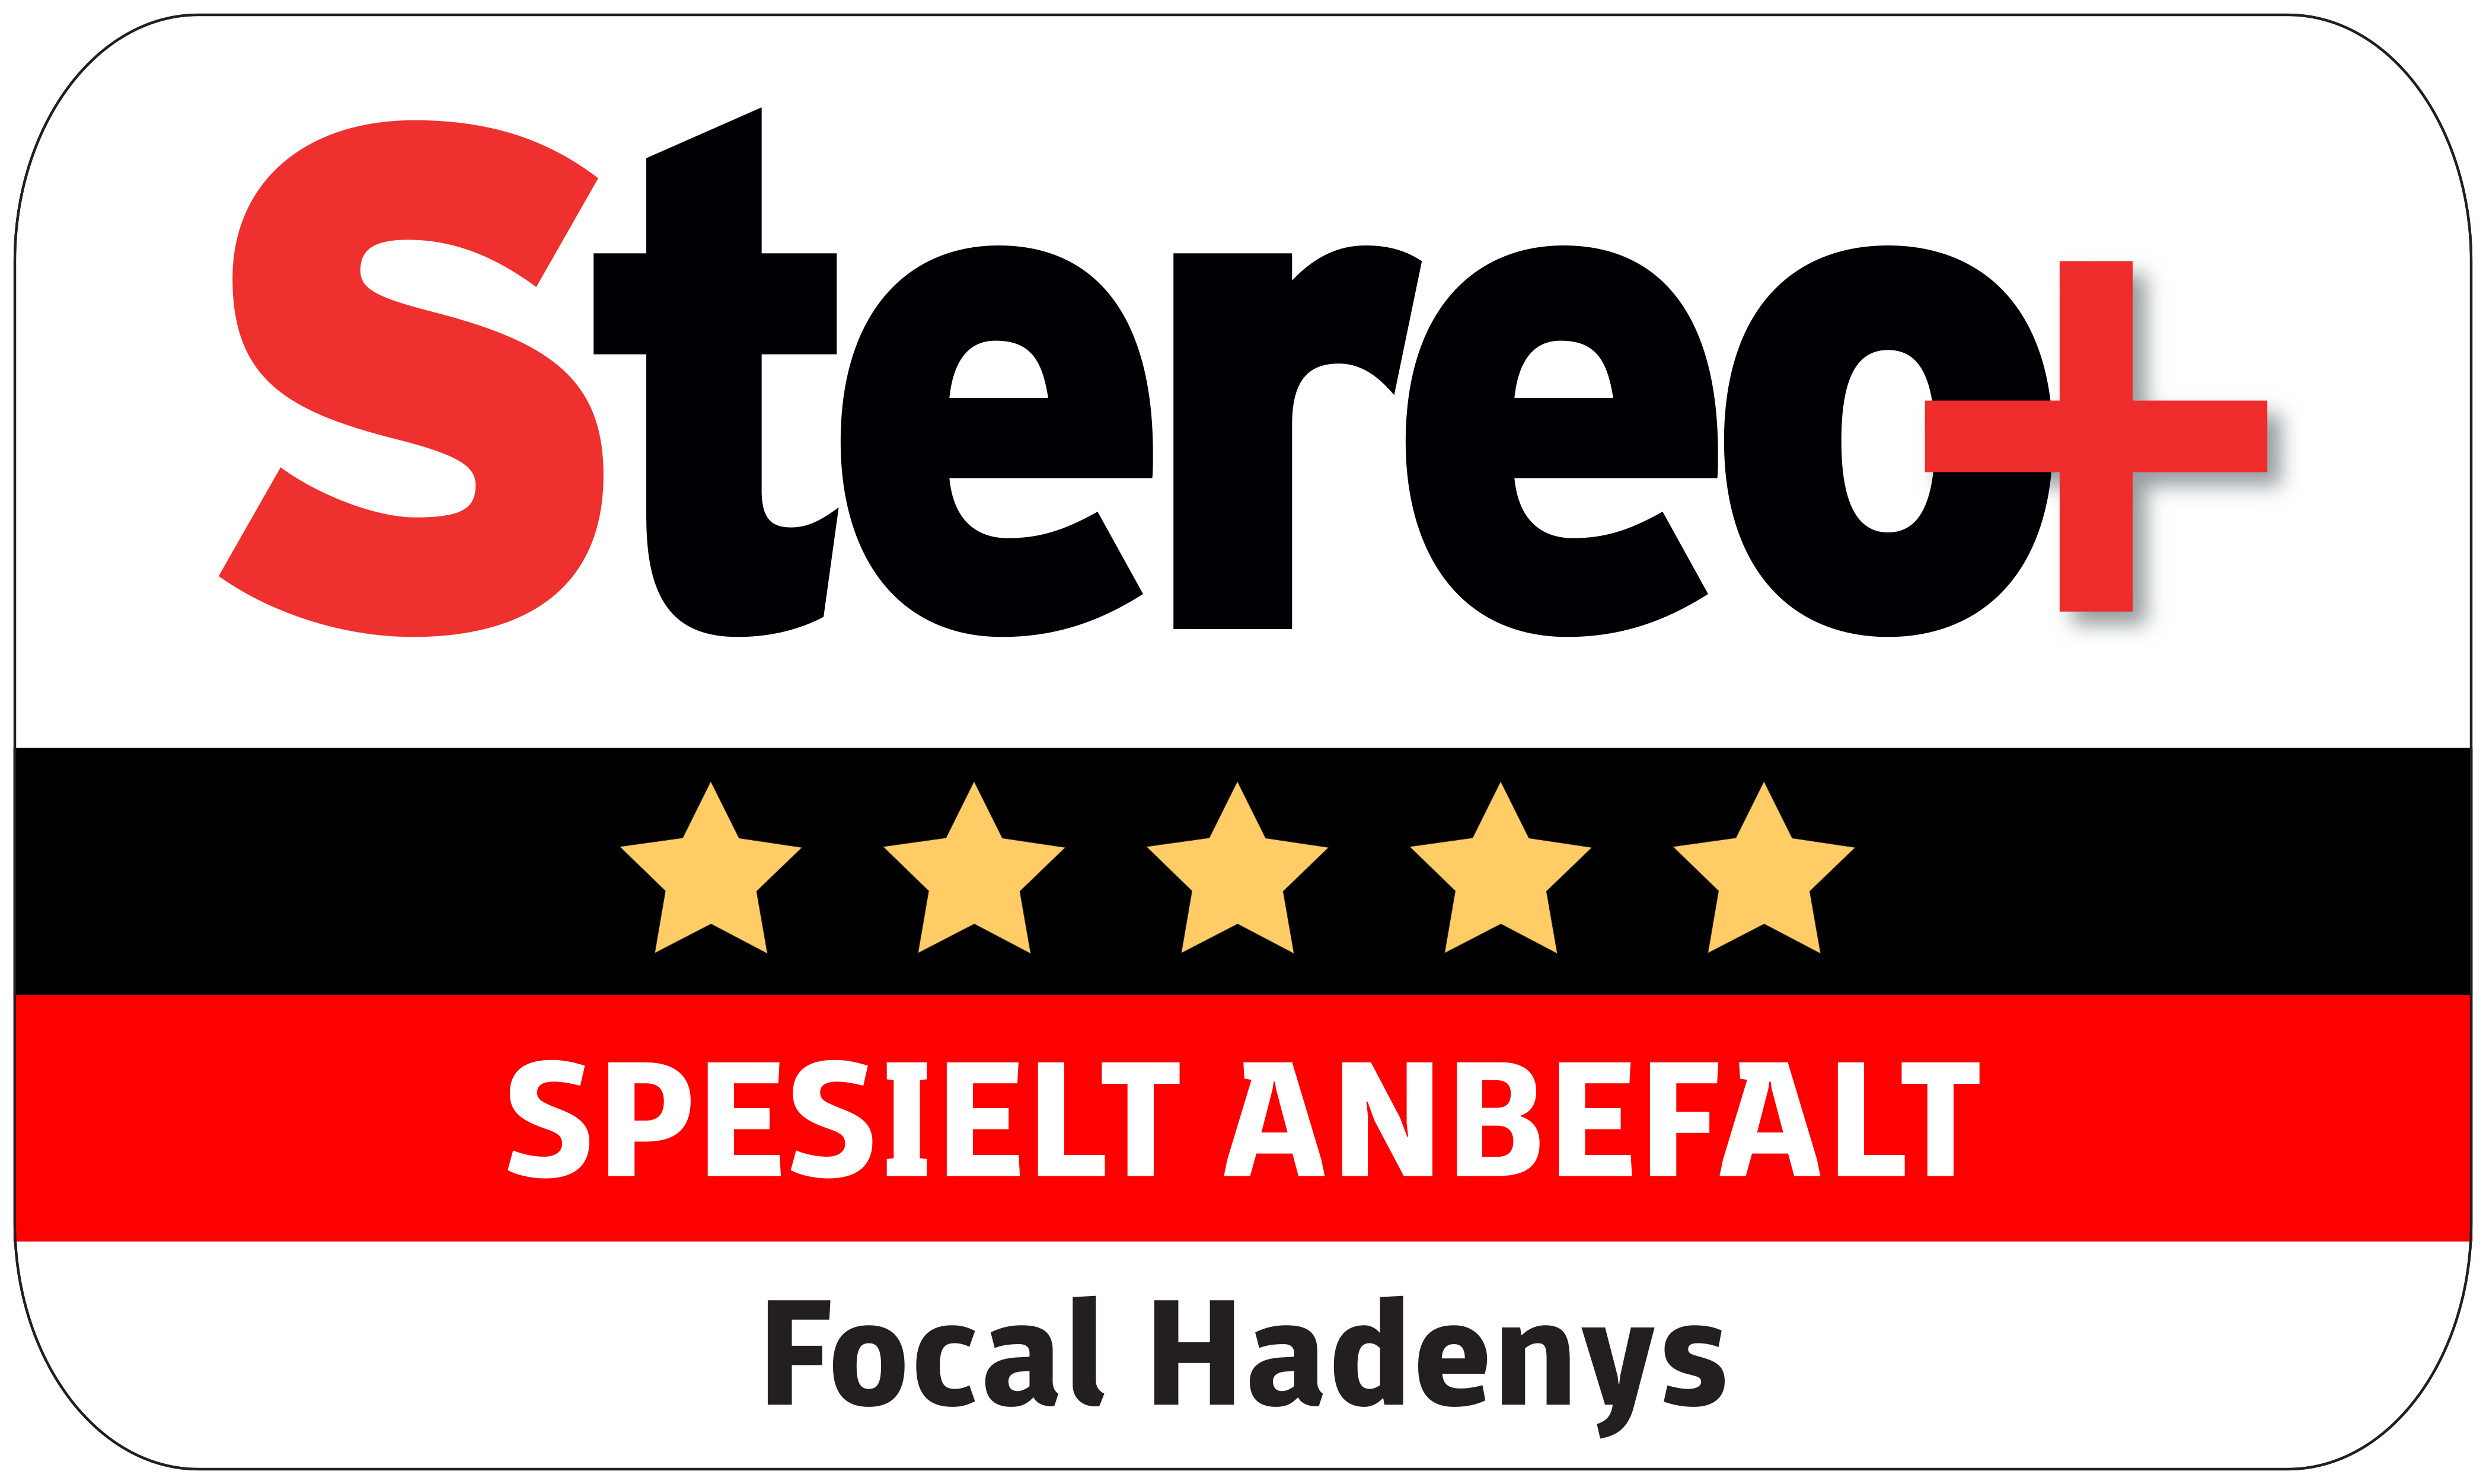 Focal Hadenys - Spesielt anbefalt i Stereopluss